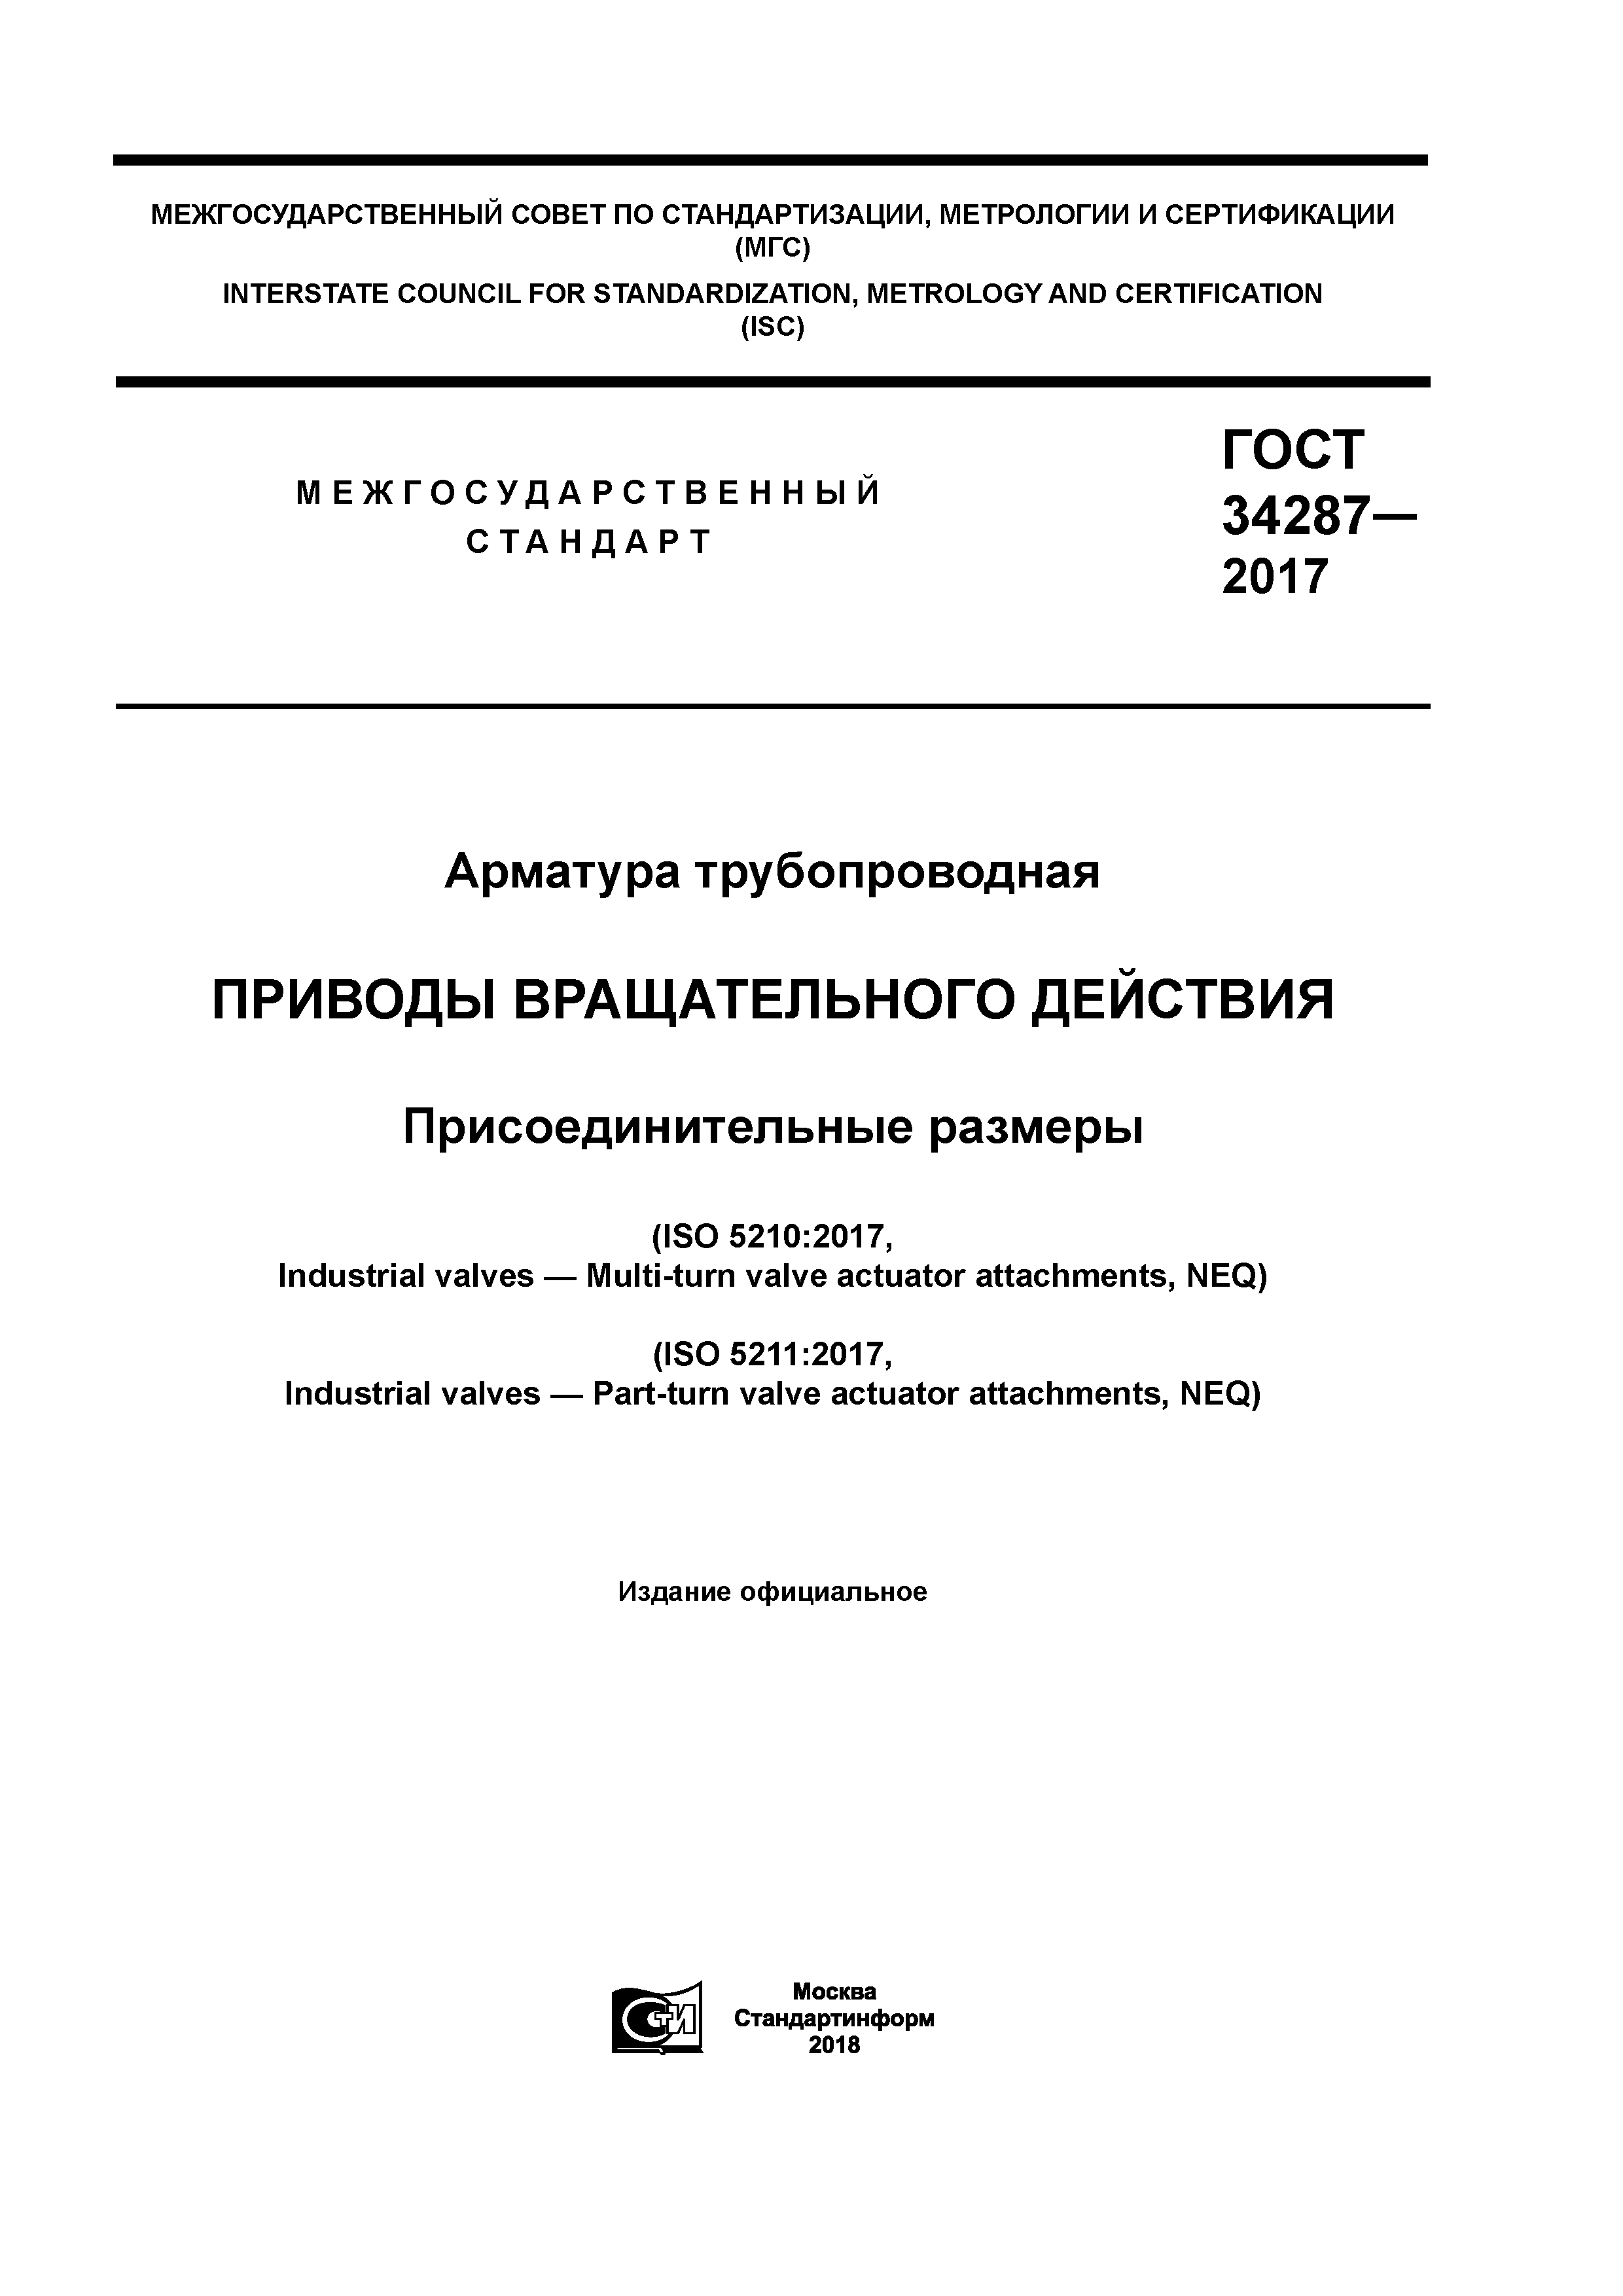 ГОСТ 34287-2017